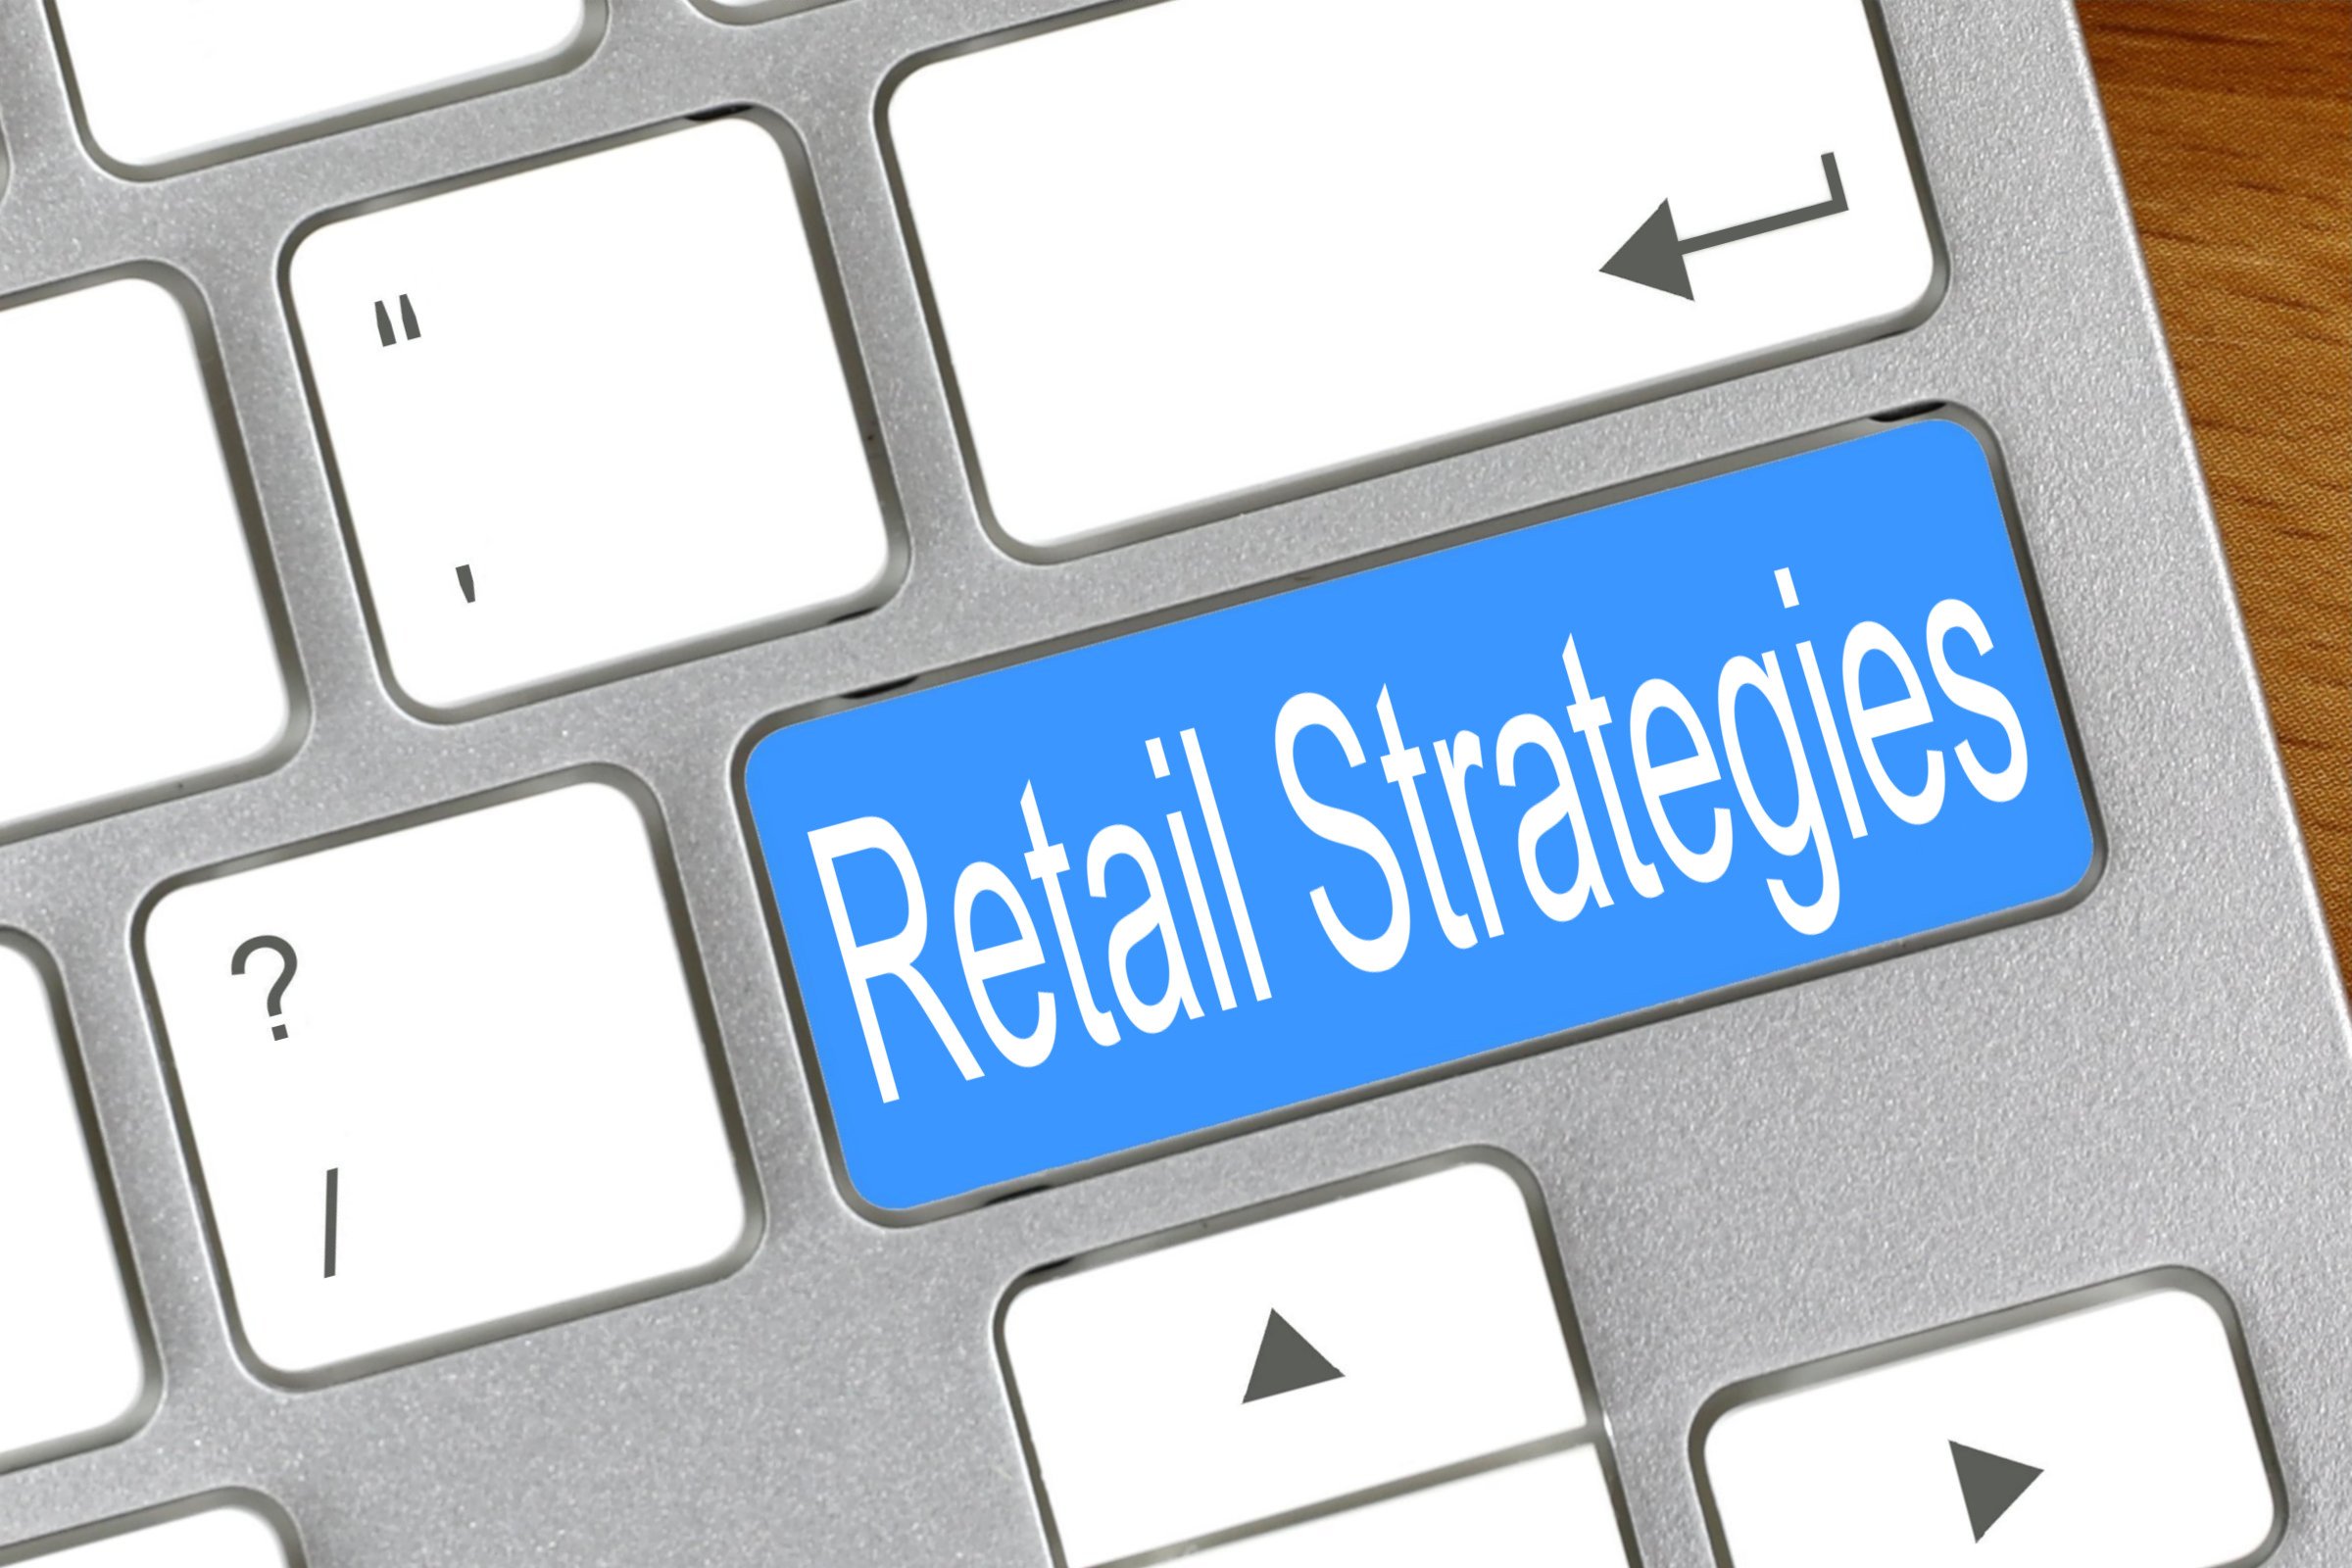 retail strategies